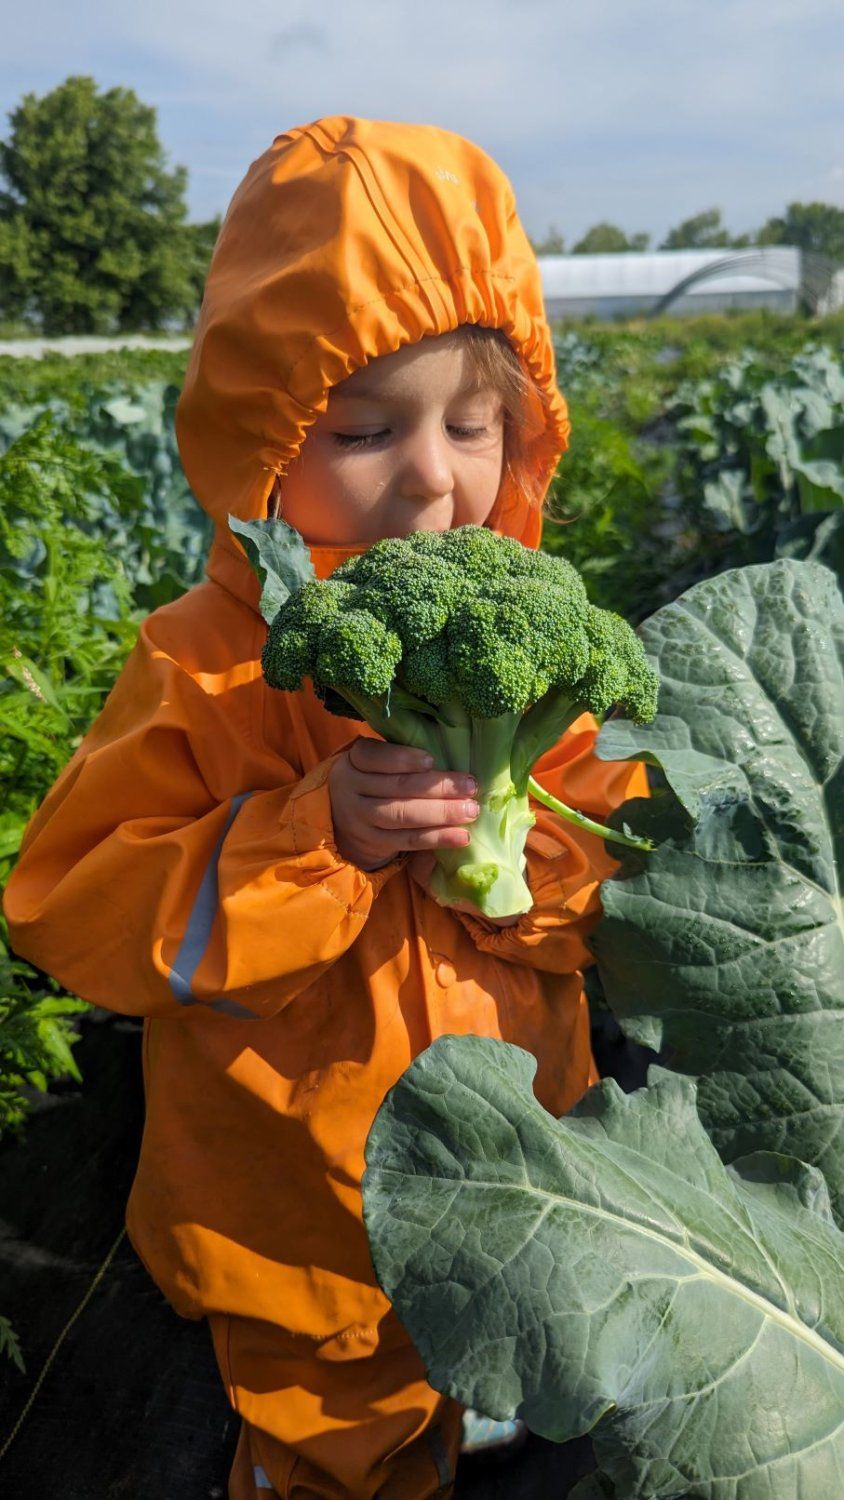 Next Happening: Farm Share 2023 Week 5 - Broccoli!